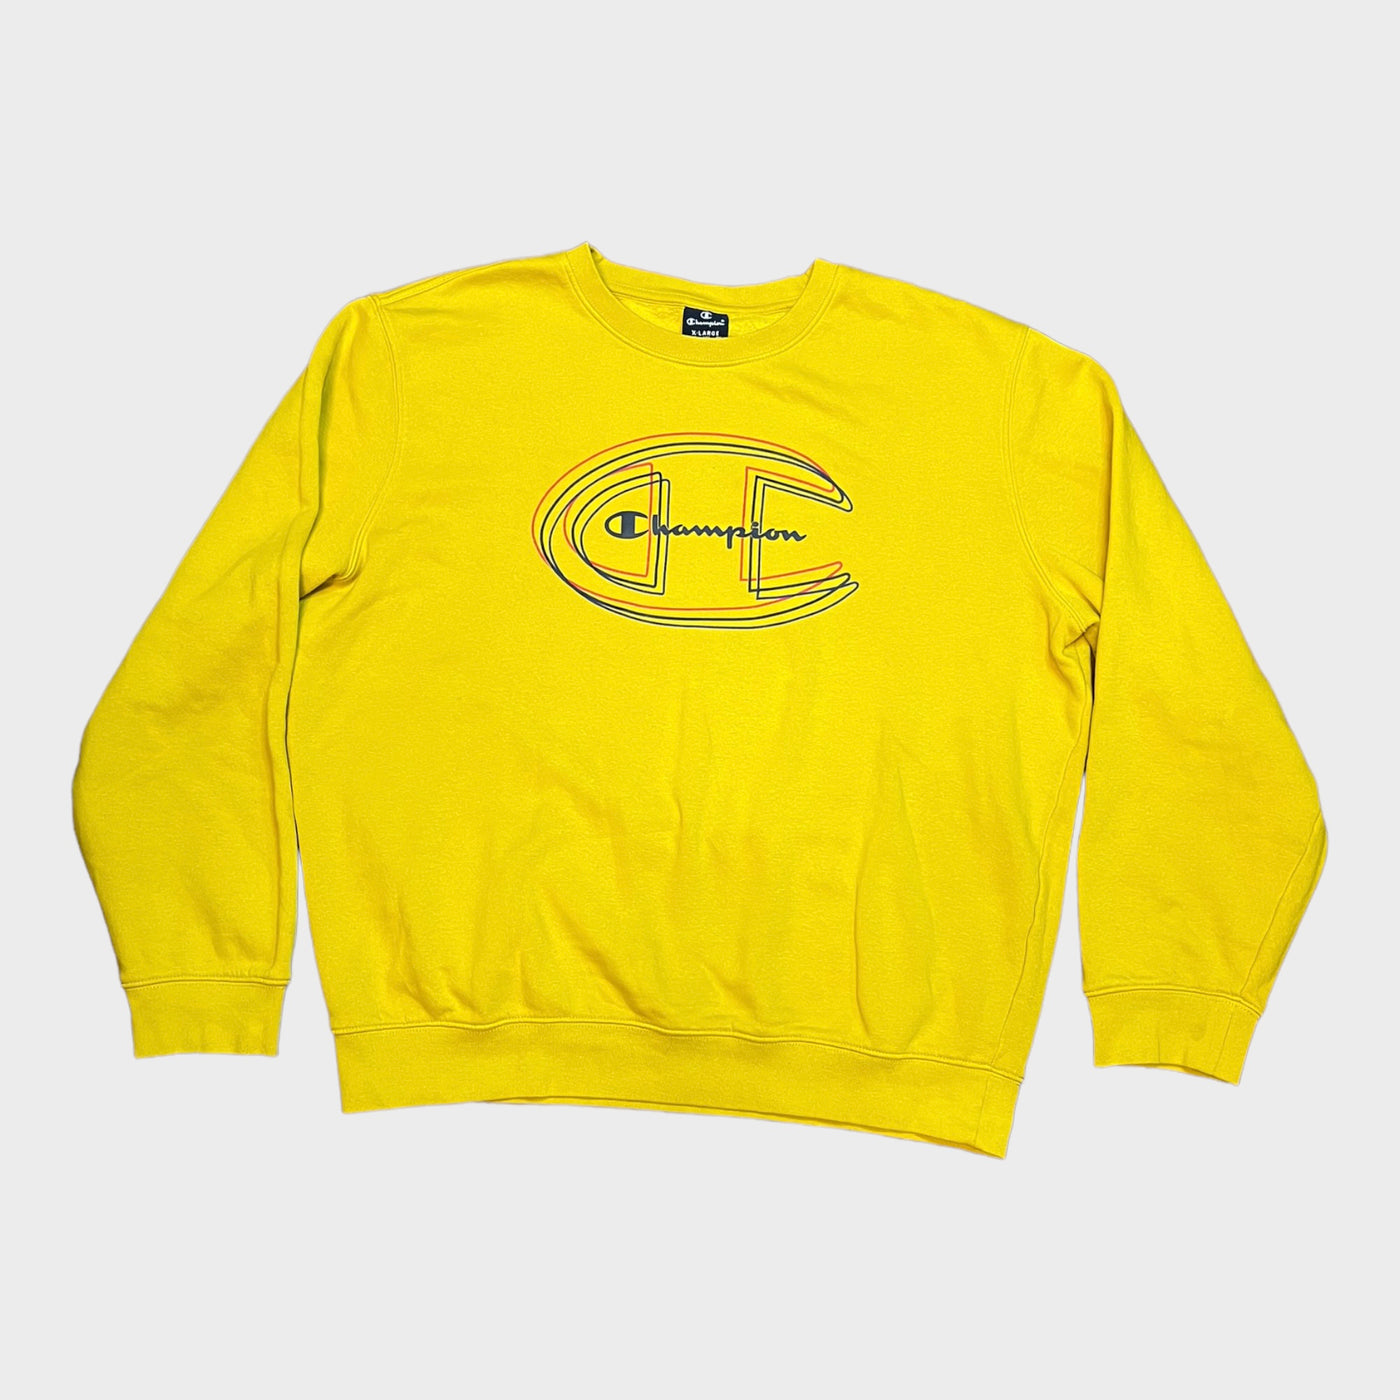 Front of the Champion varsity sweatshirt in bright yellow